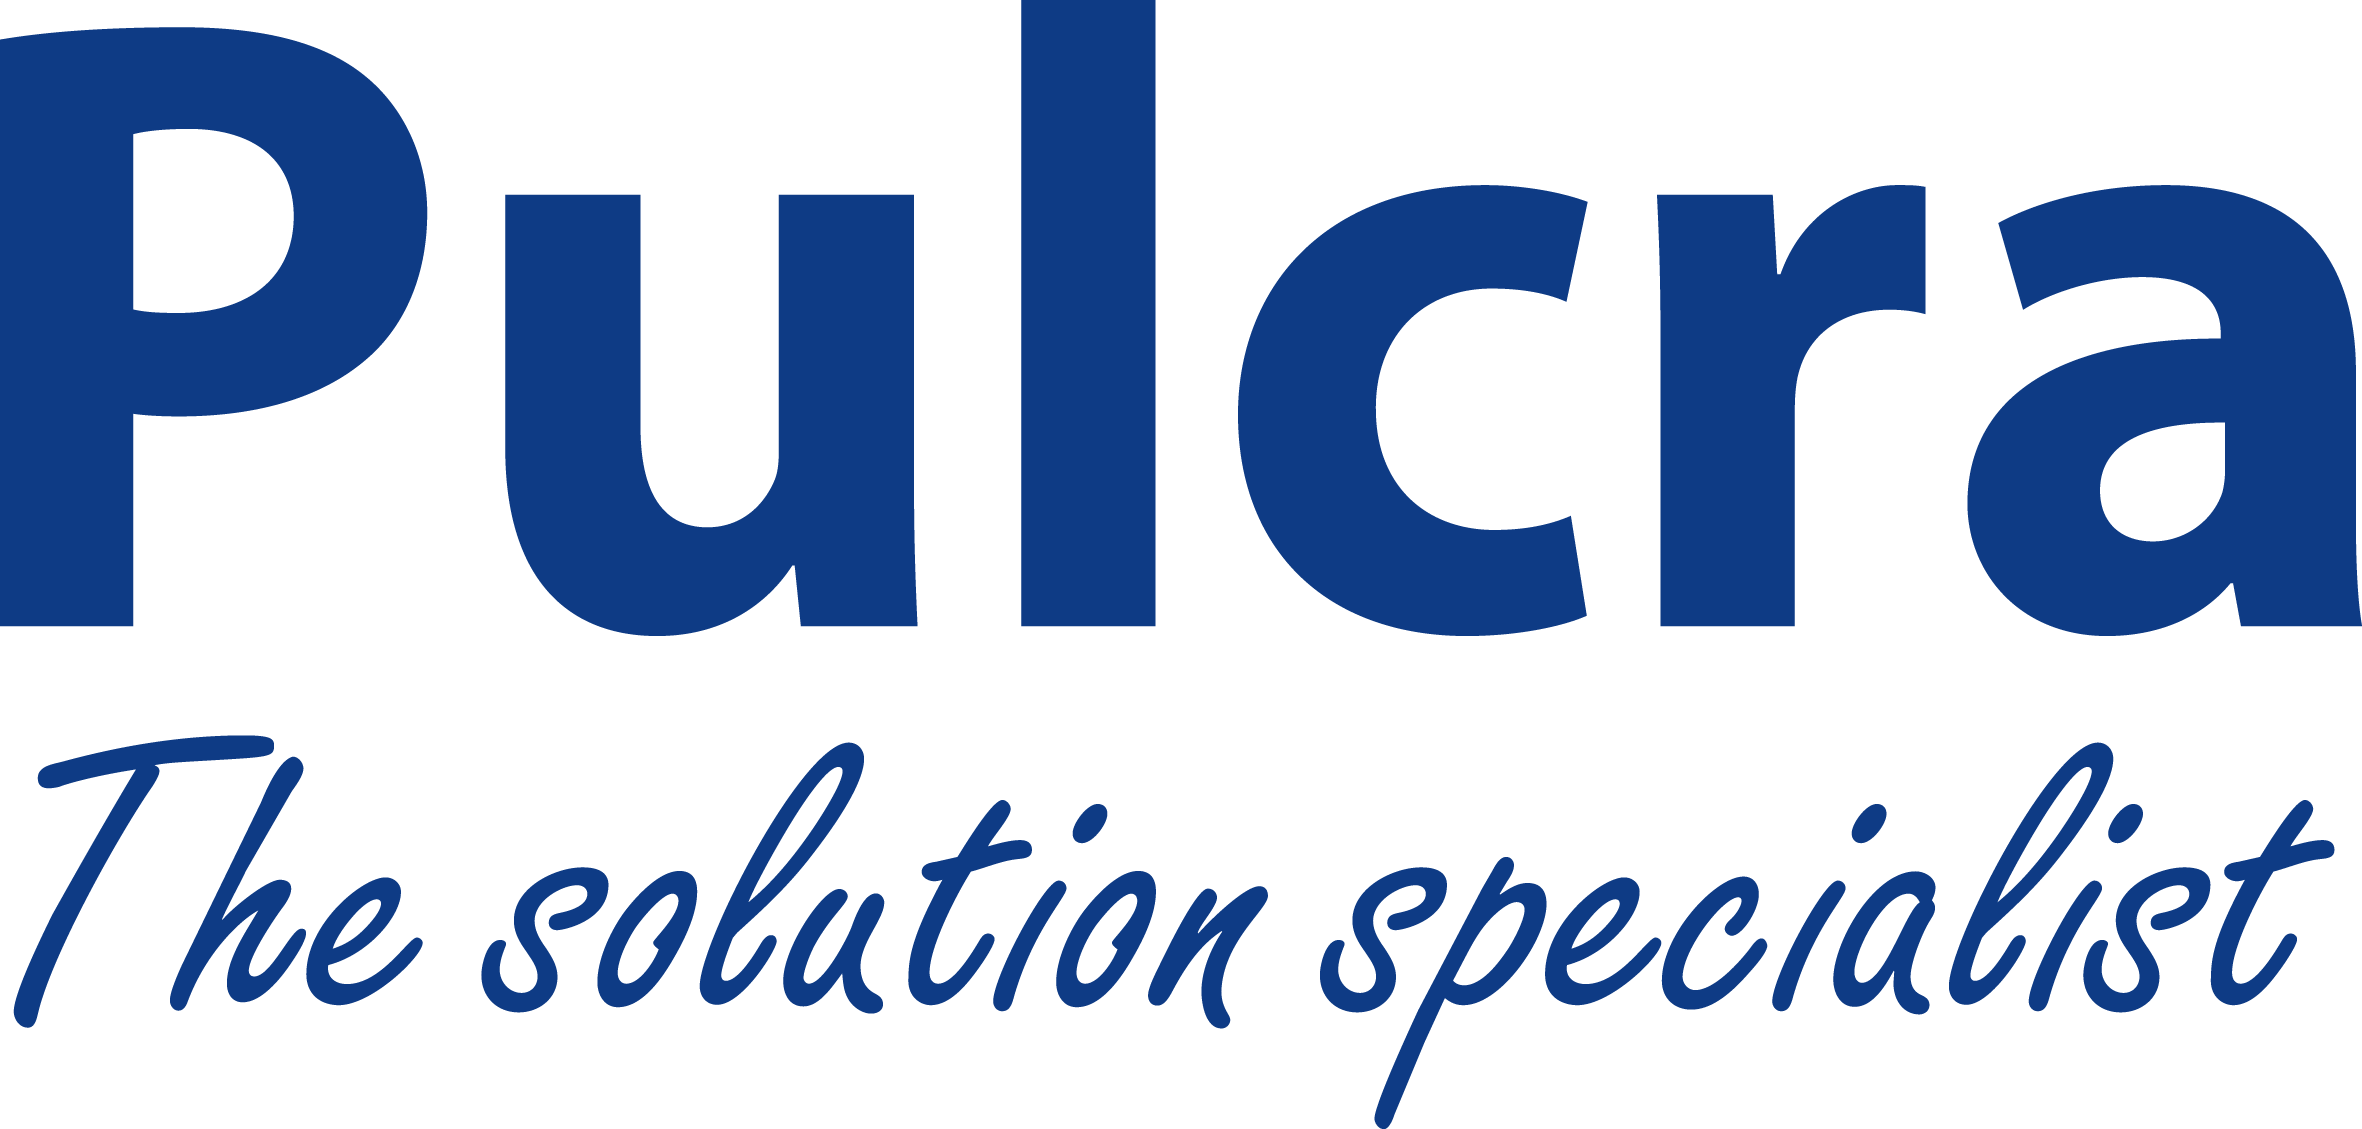 Pulcra-solution_4c0a0KheATlbxX8